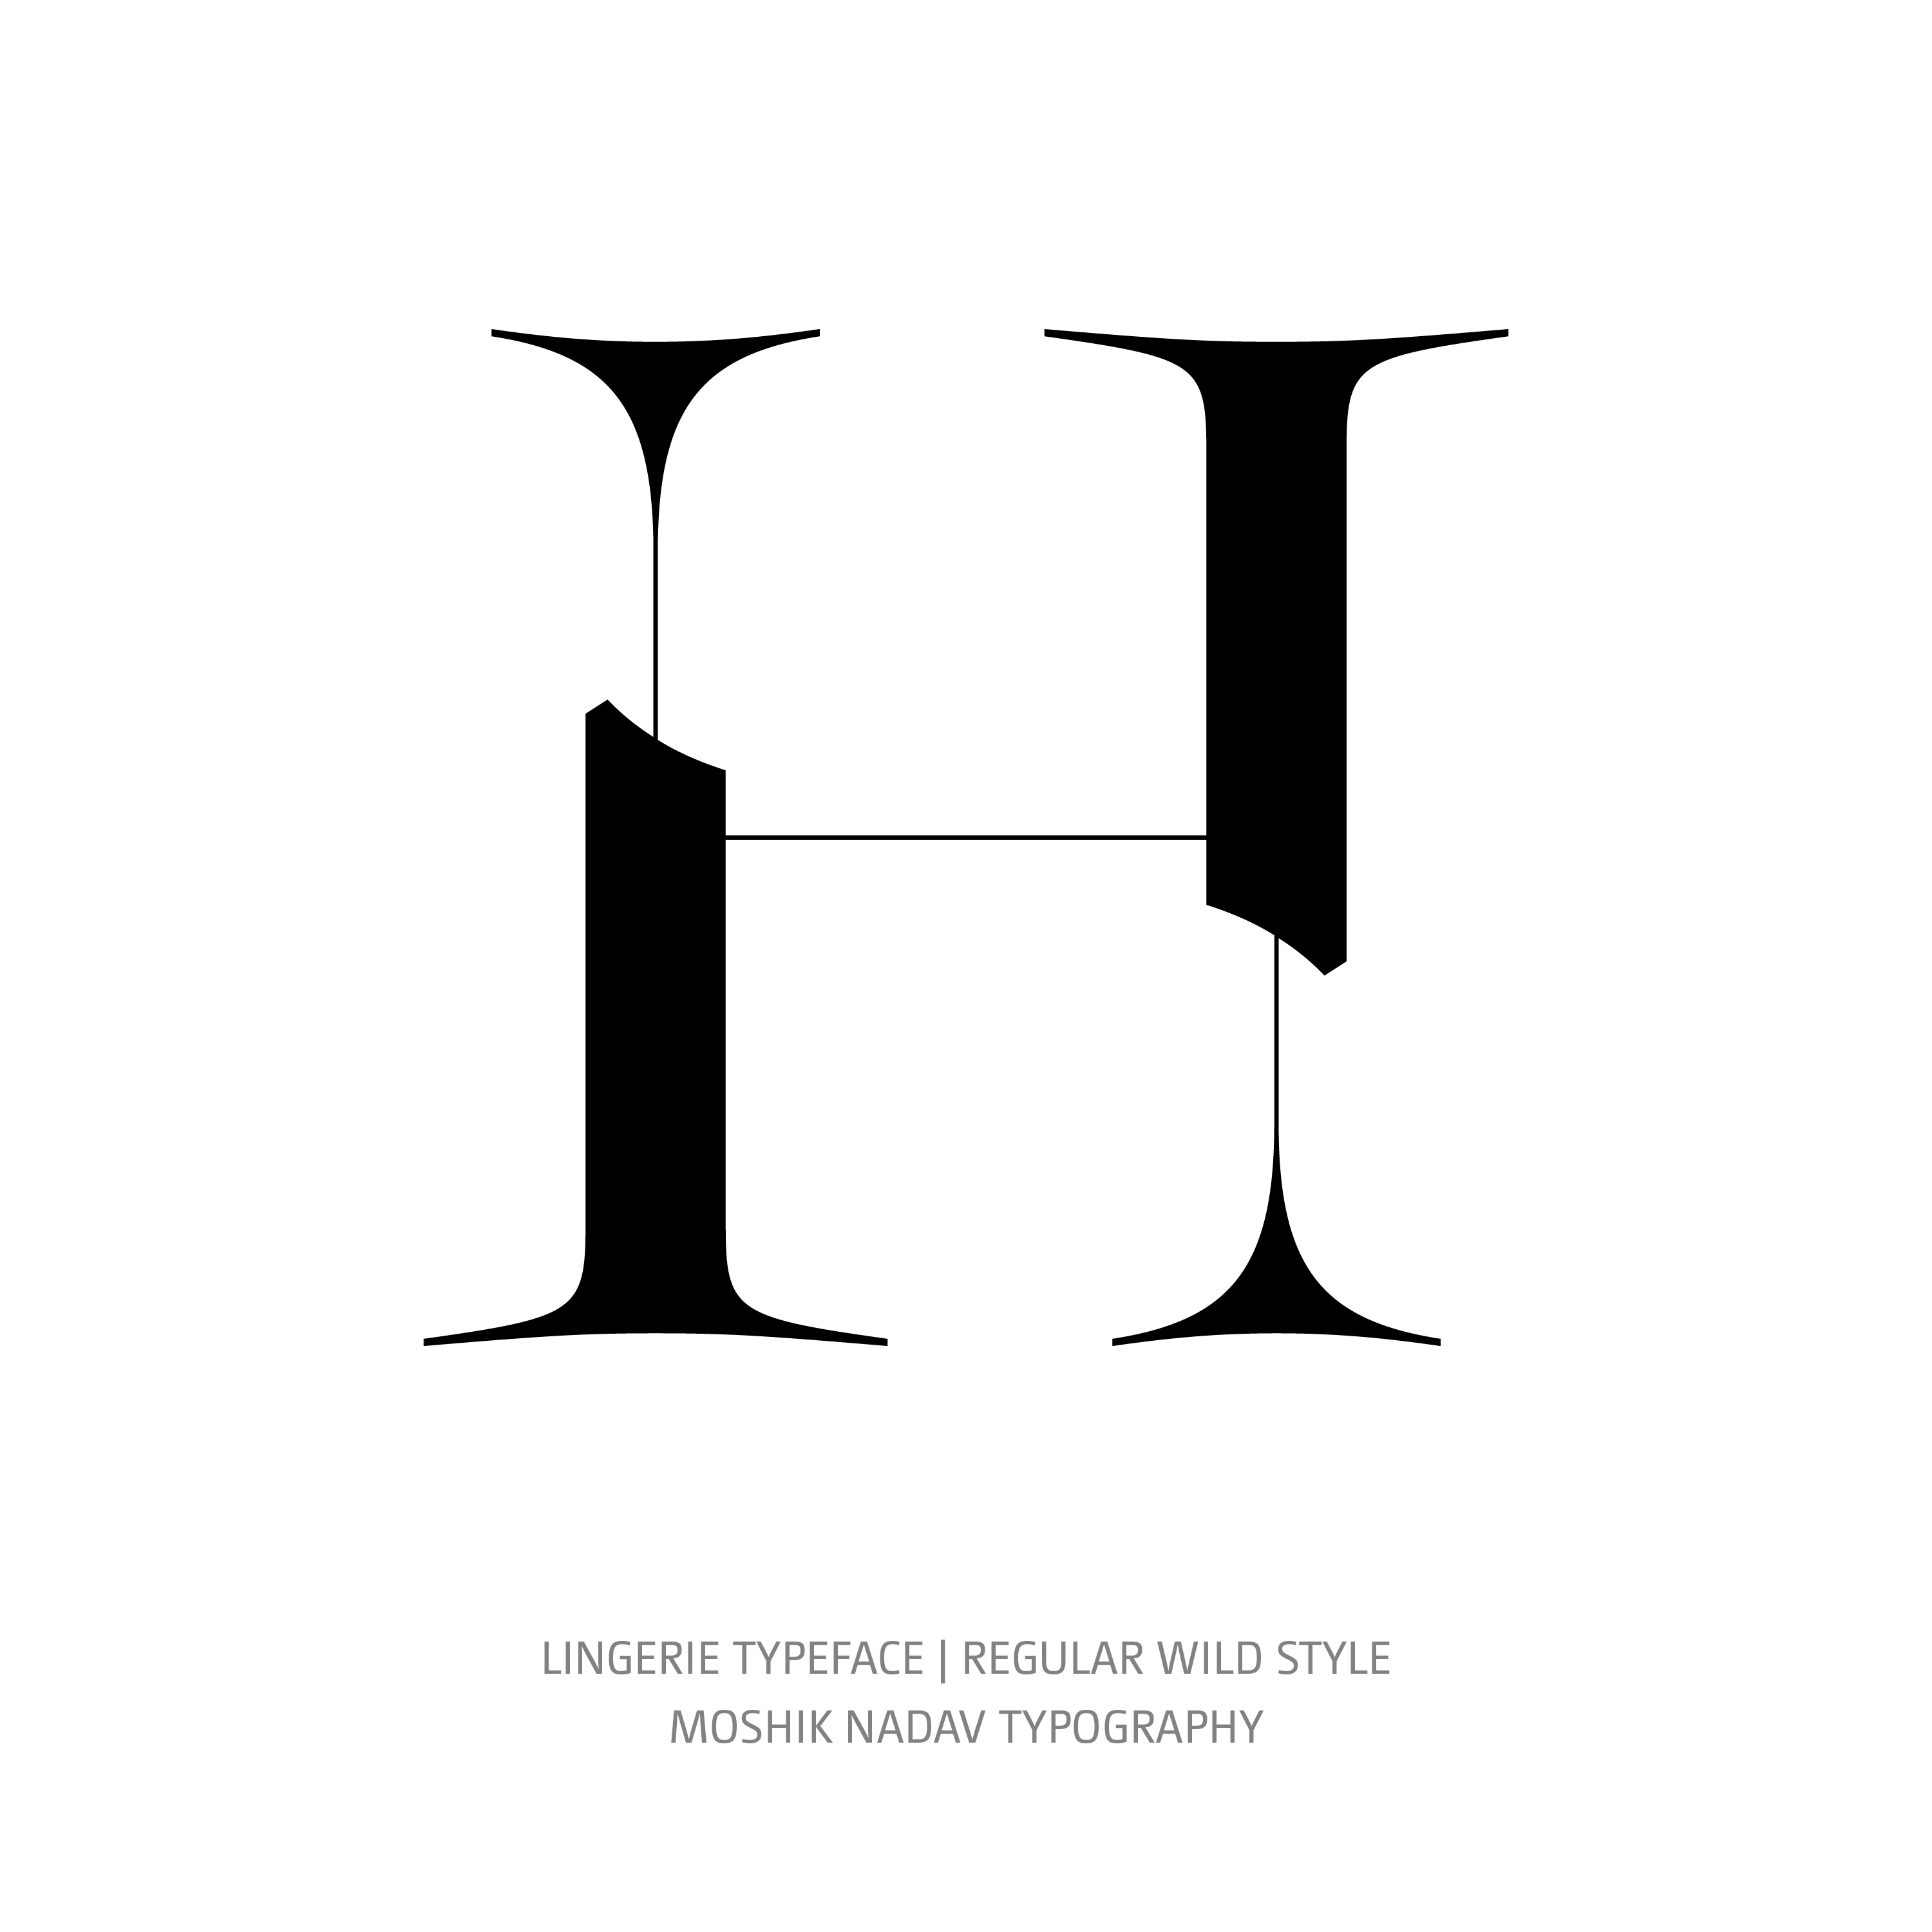 Lingerie Typeface Regular Wild H